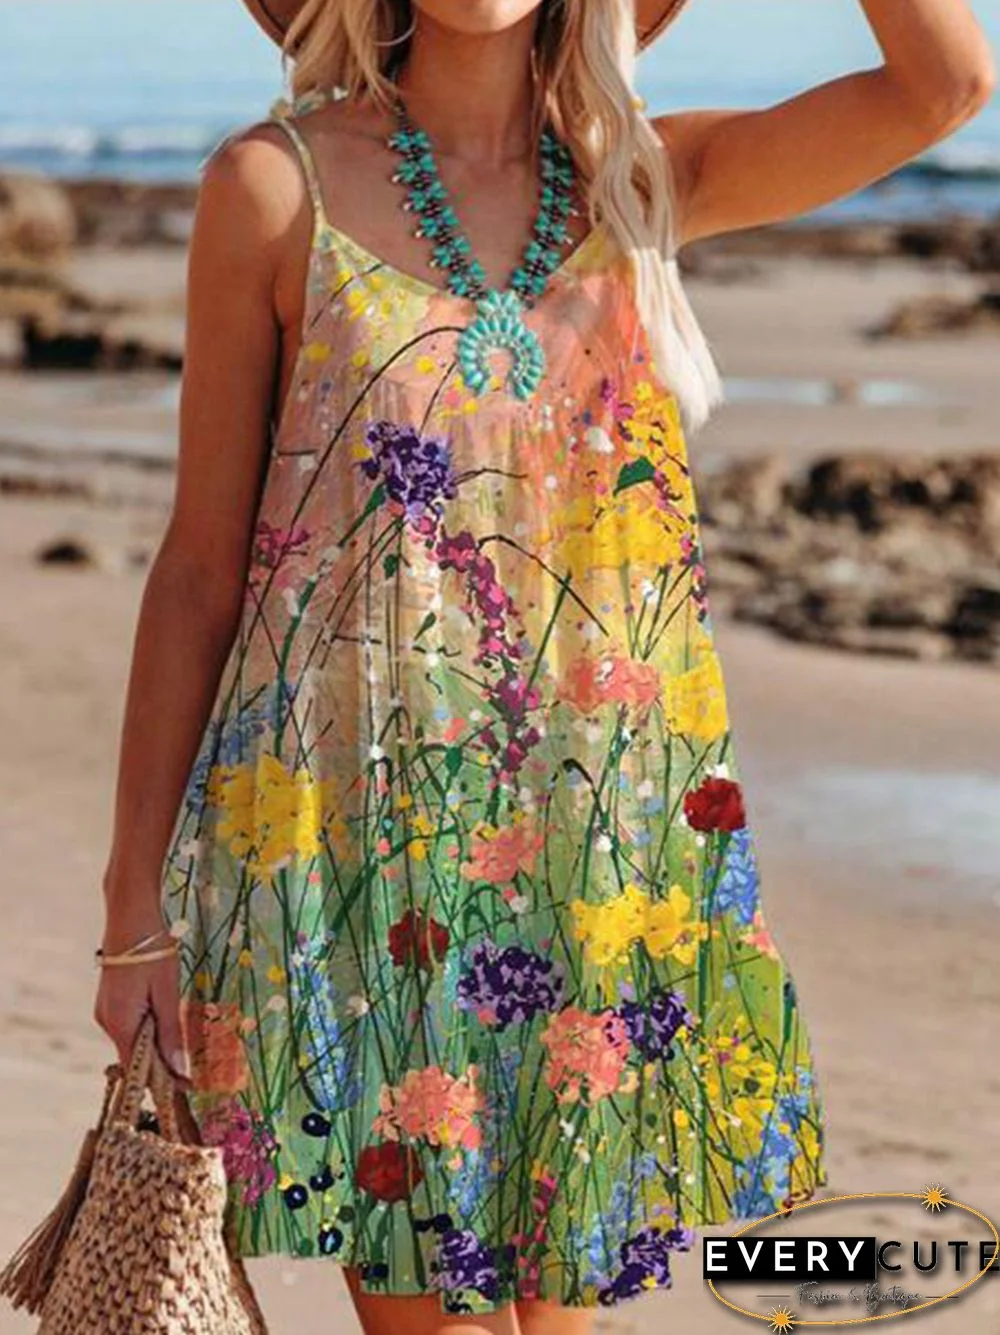 Summer Vintage Pattern Printed Beach Dress Women Casual Sling V-Neck Lace-up Mini Dress Ladies Fashion Sleeveless Loose Dresses